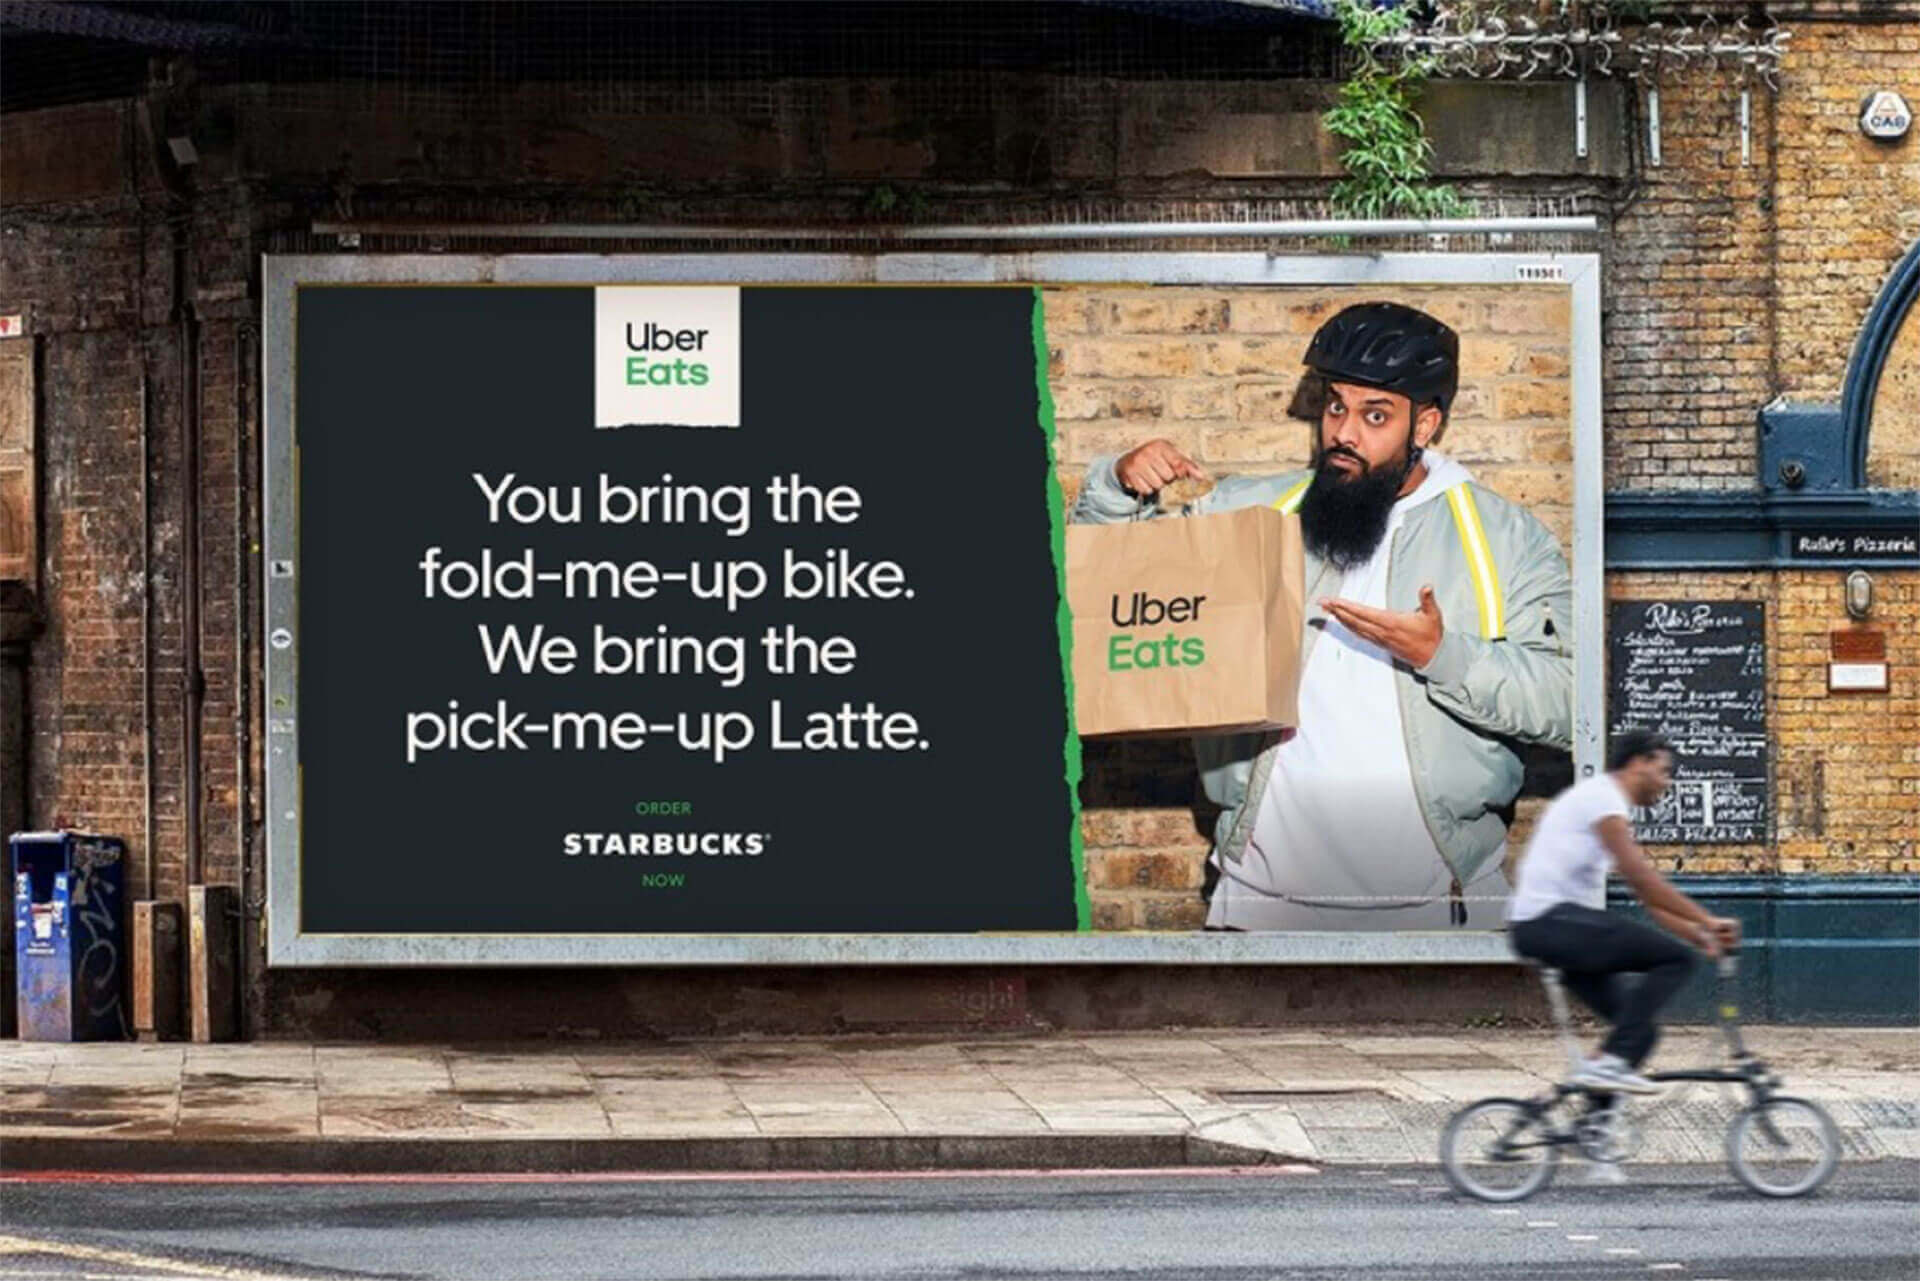 Uber eats advertising in London